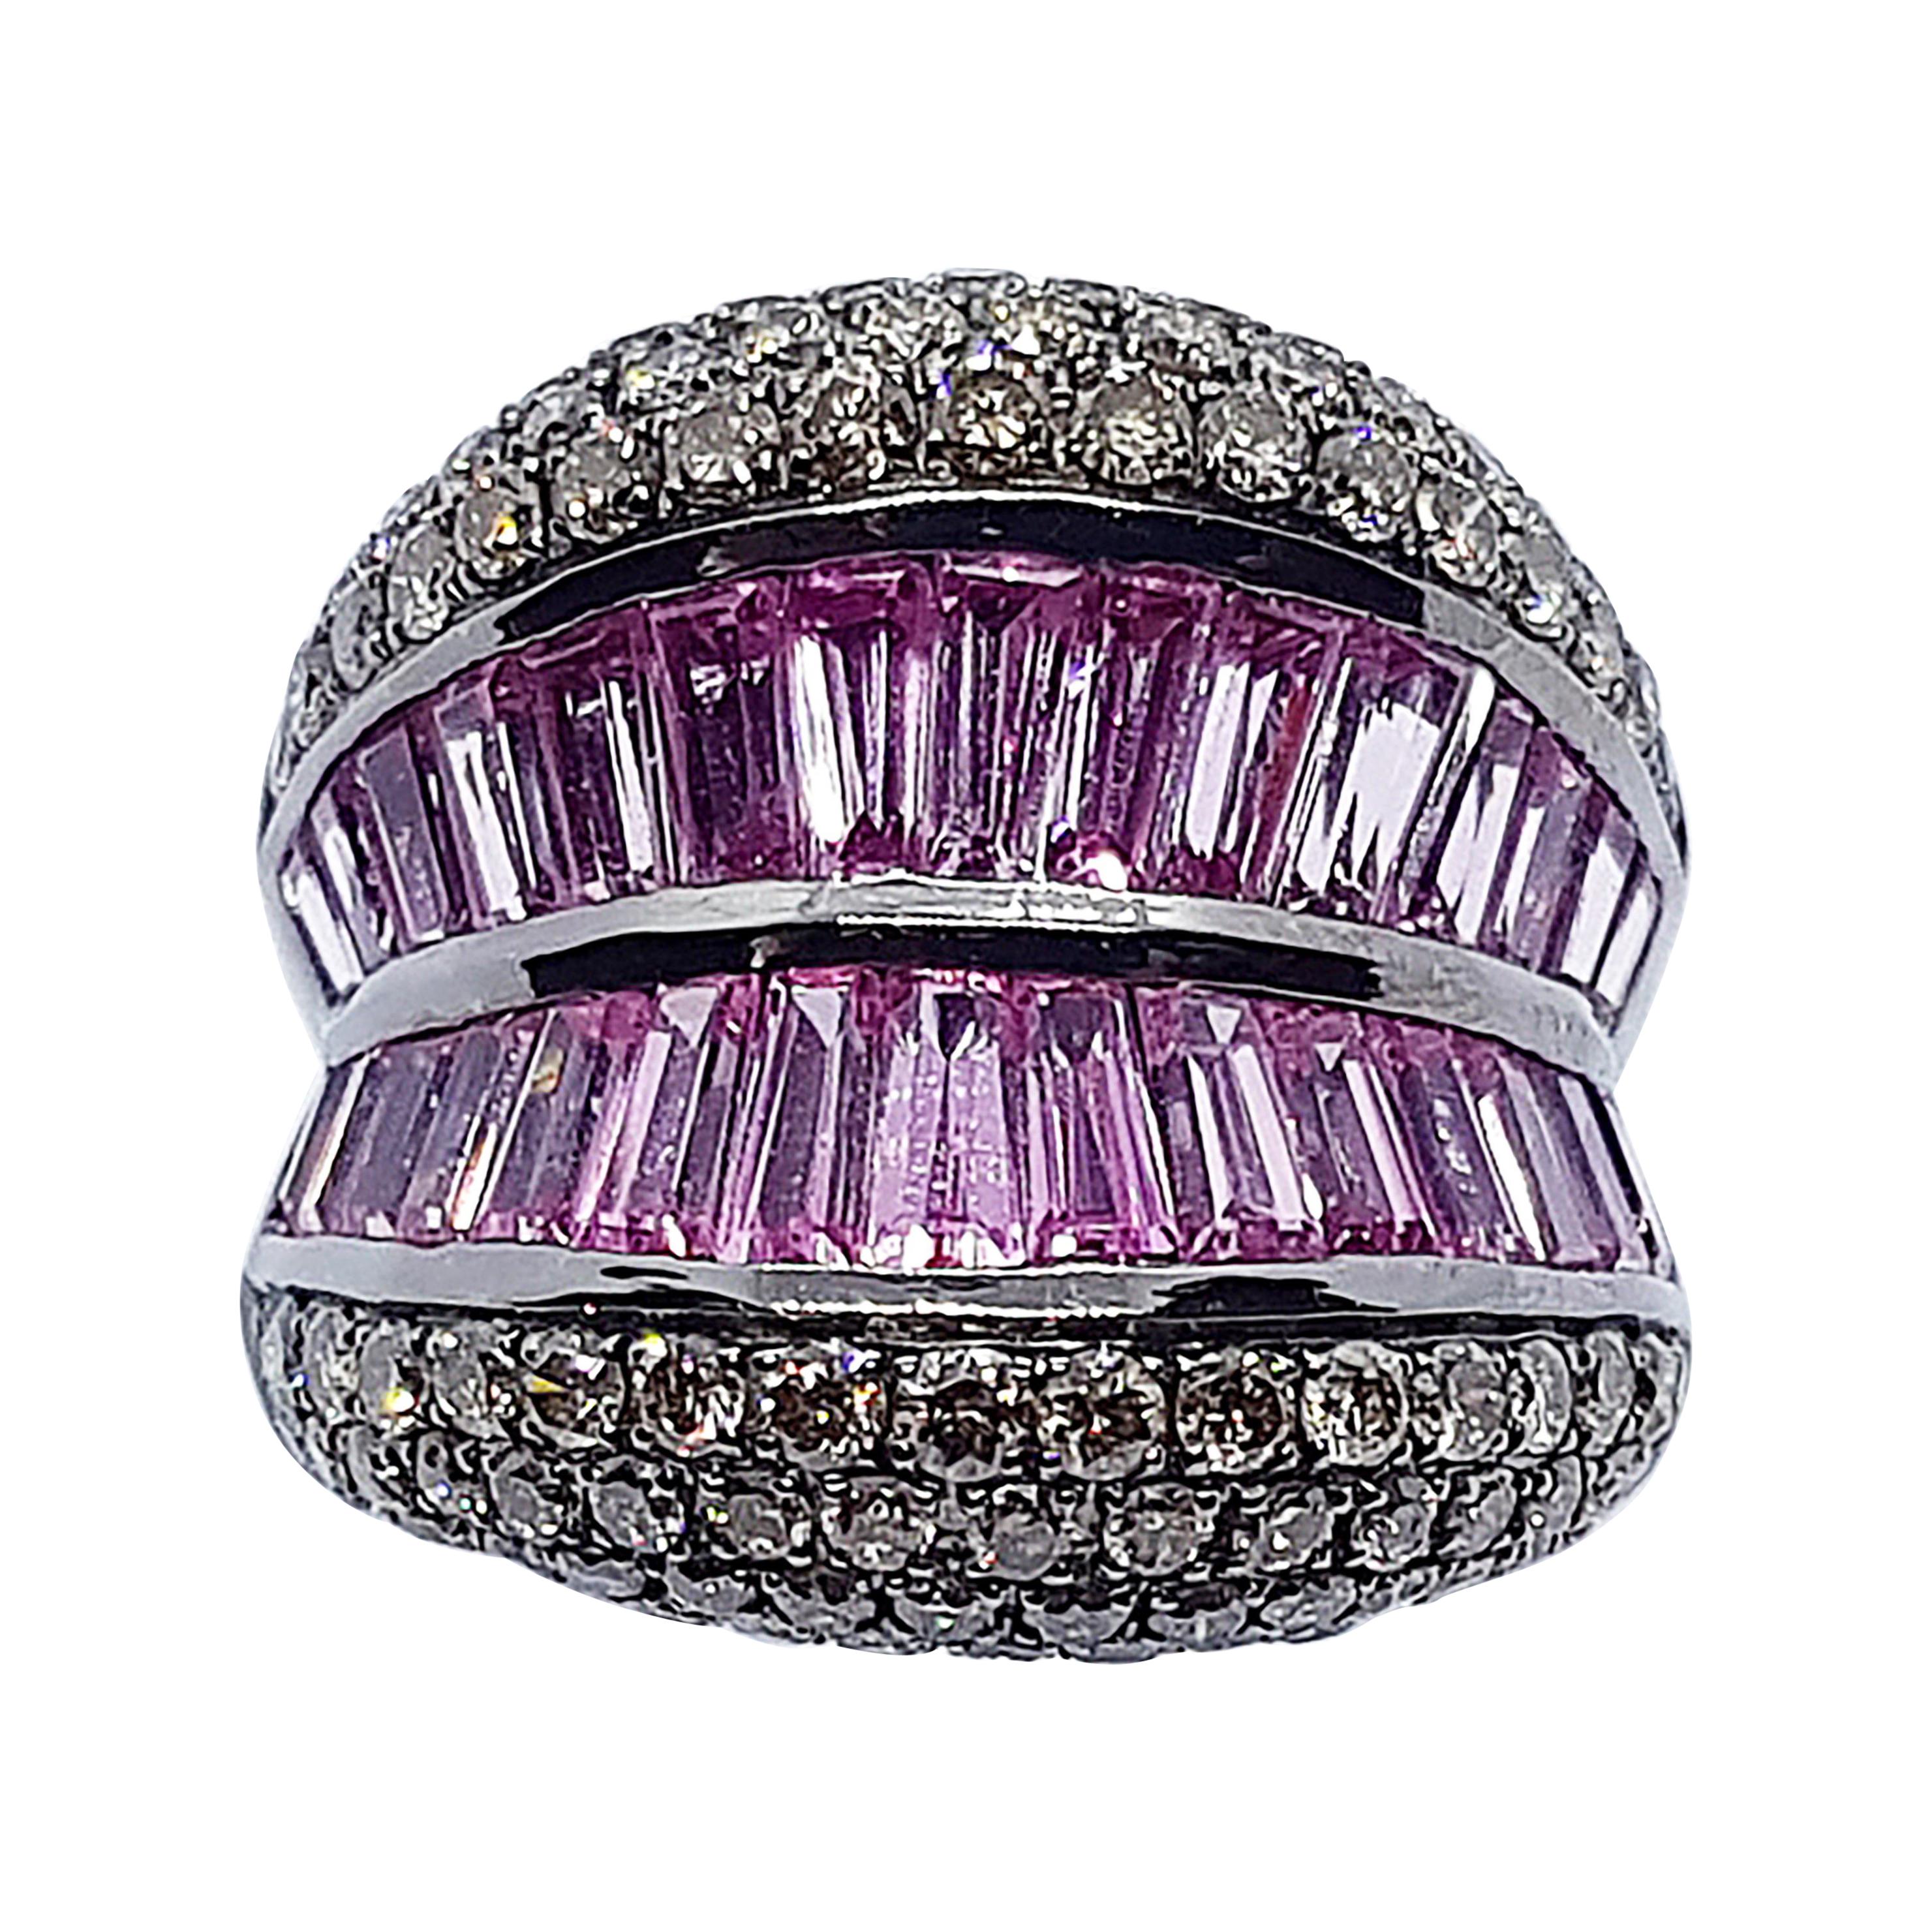 Pink Sapphire with Brown Diamond Ring Set in 18 Karat White Gold Settings